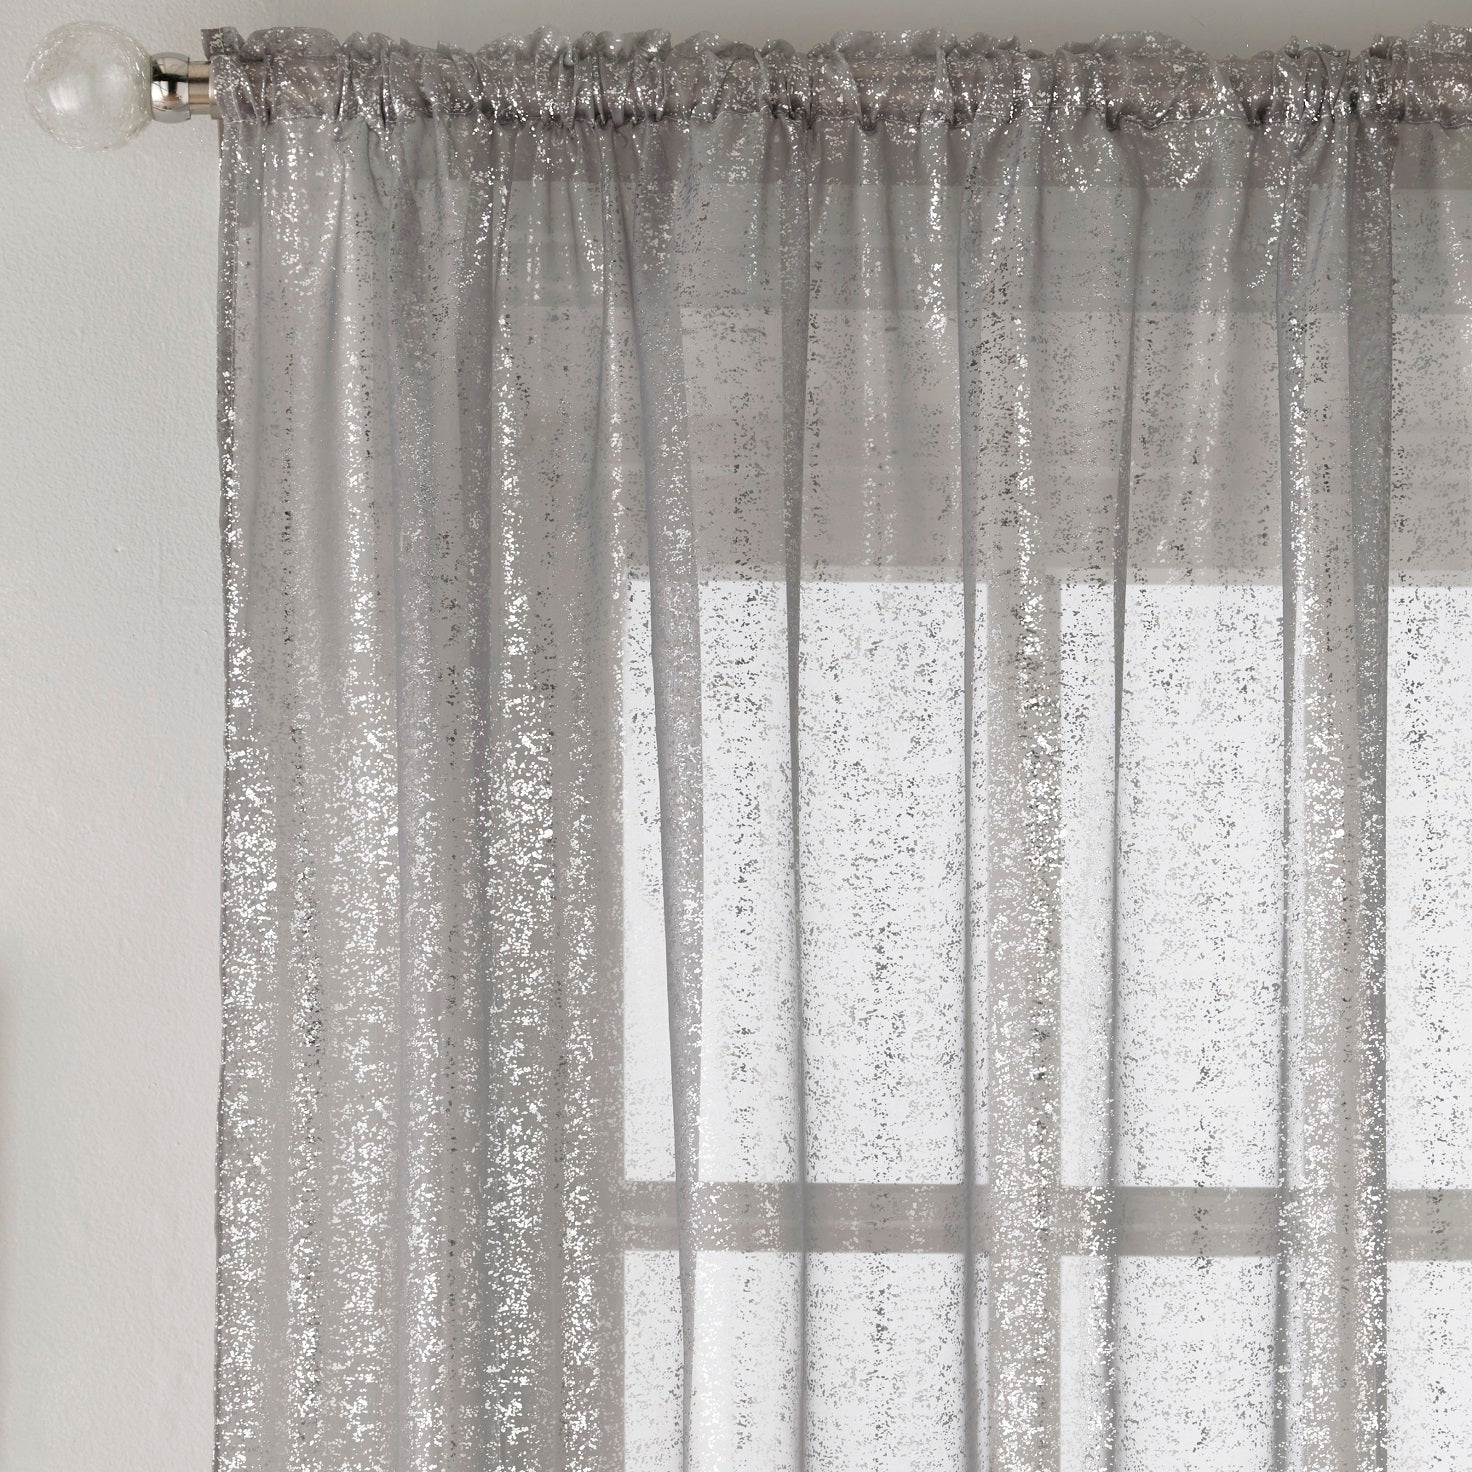 55x48" Pandora Voile Net Curtains Panel - Grey & Silver